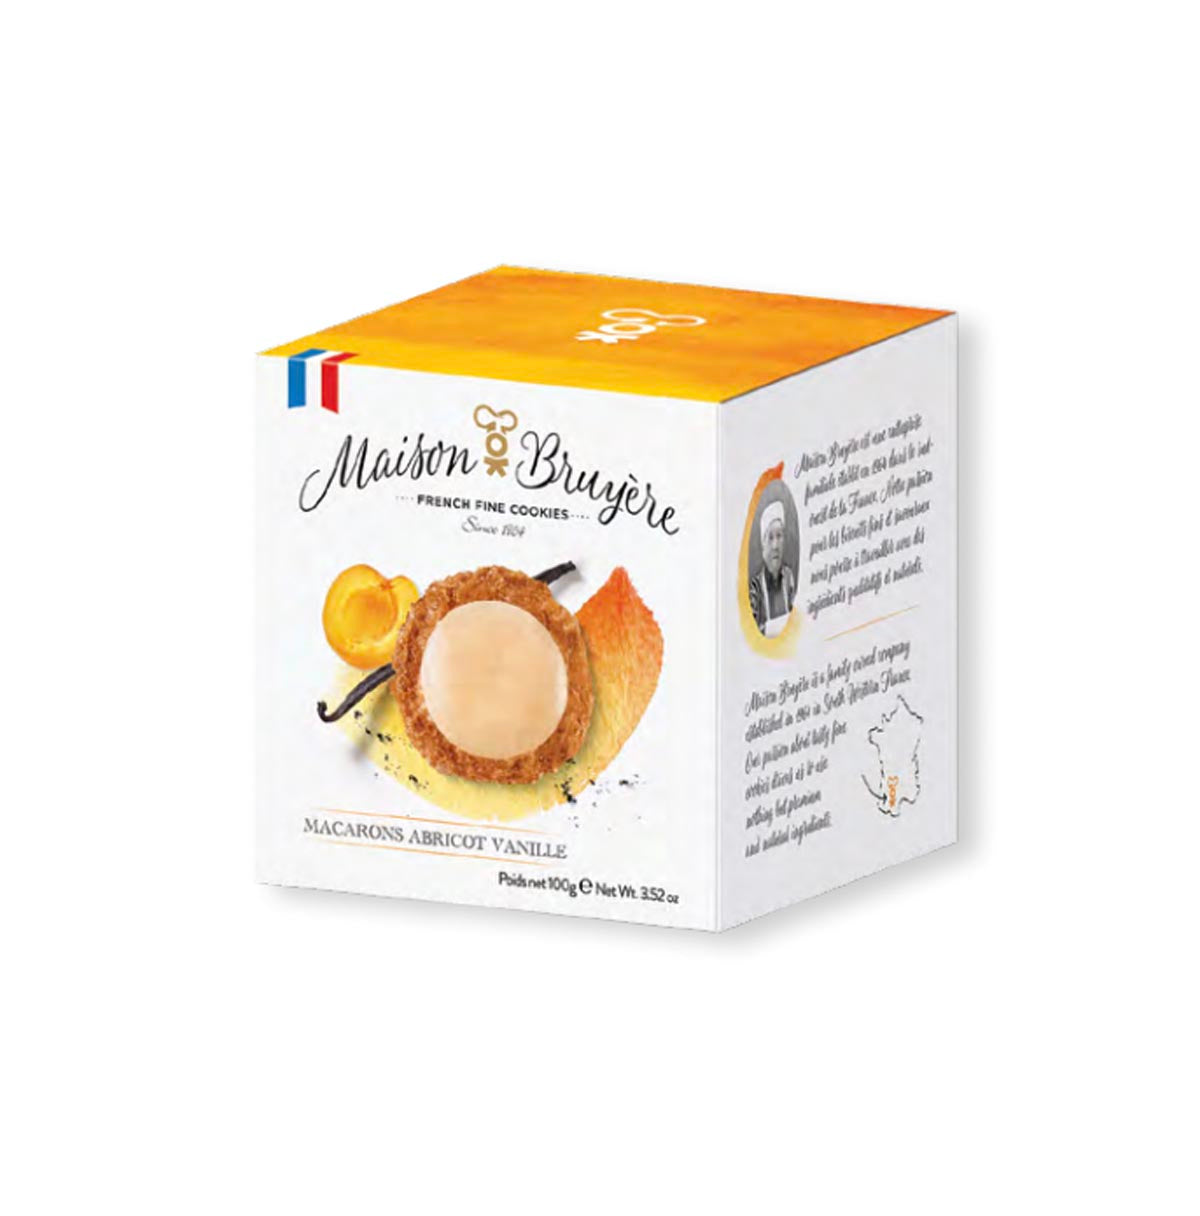 Maison Bruyère - Apricot Vanilla Macaroons